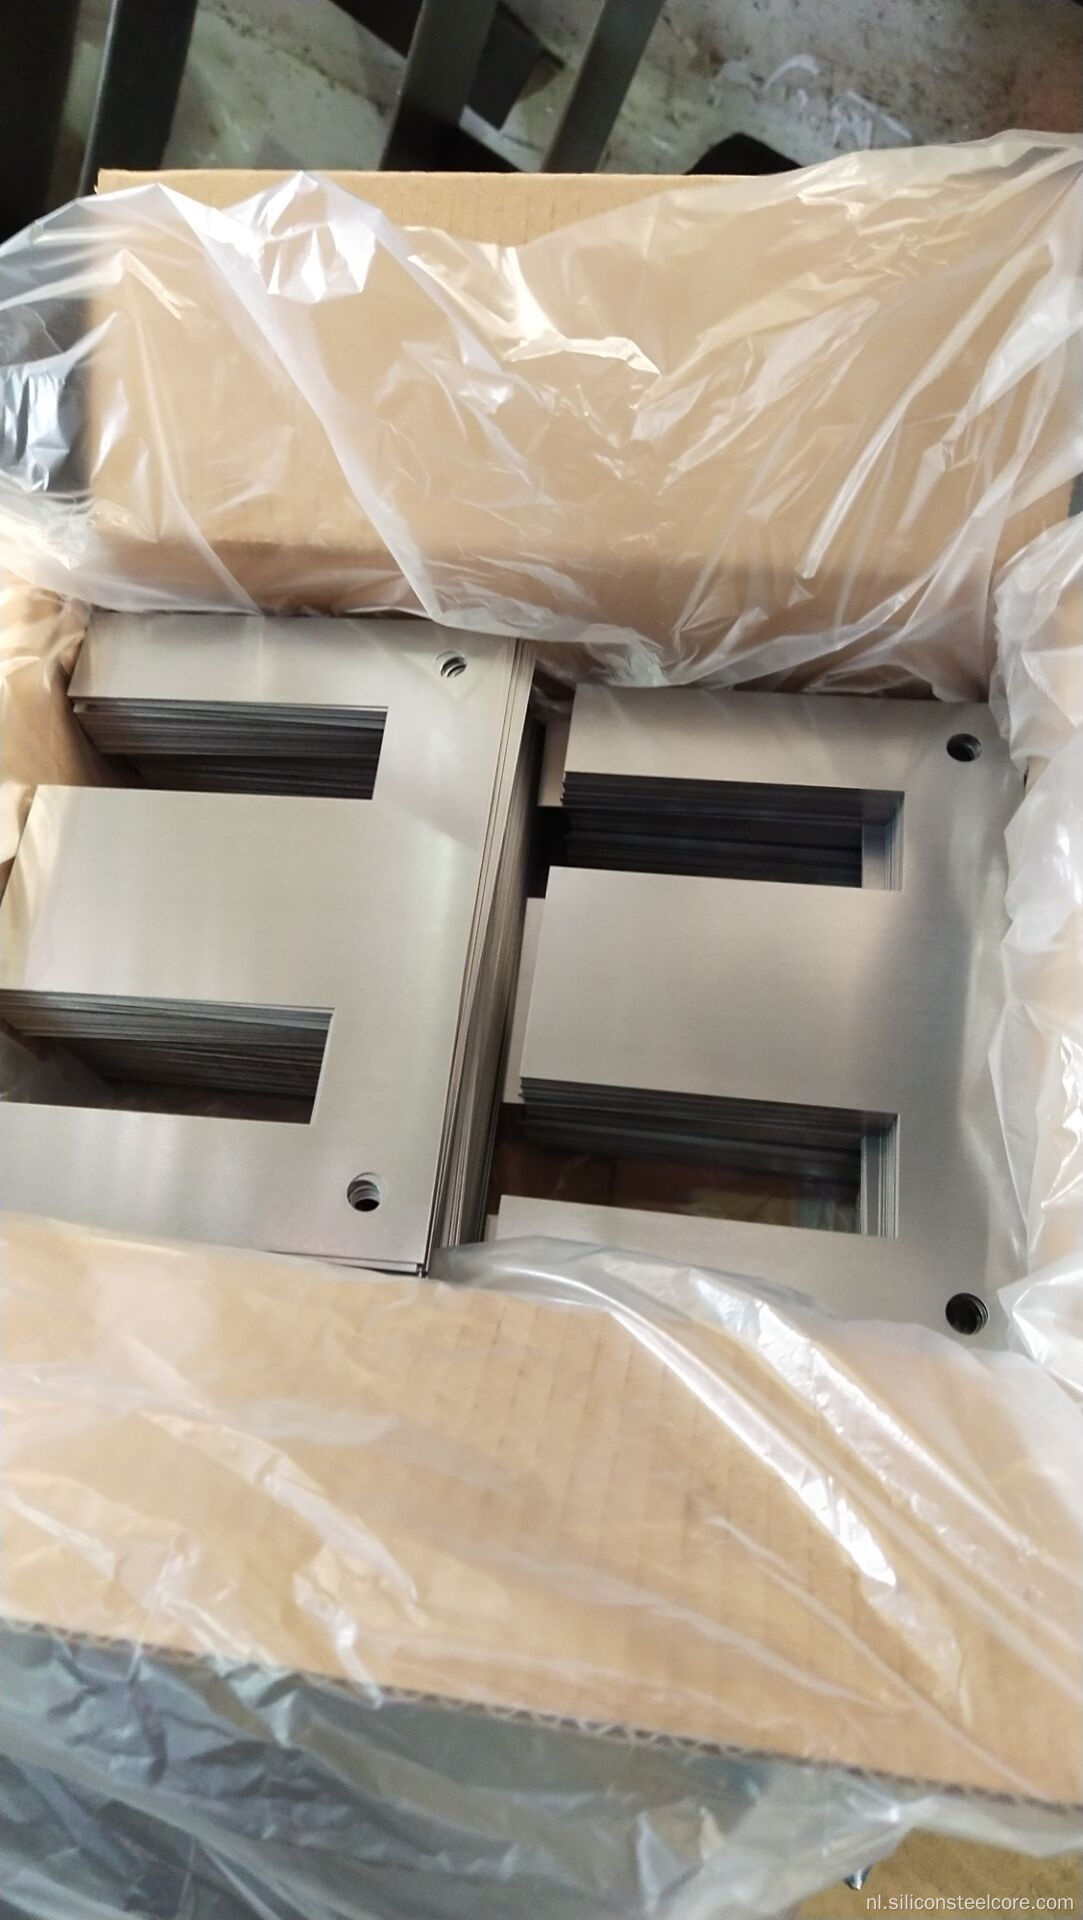 Chuangjia Silicon Steel EI 35 kernlaminatie met gaten